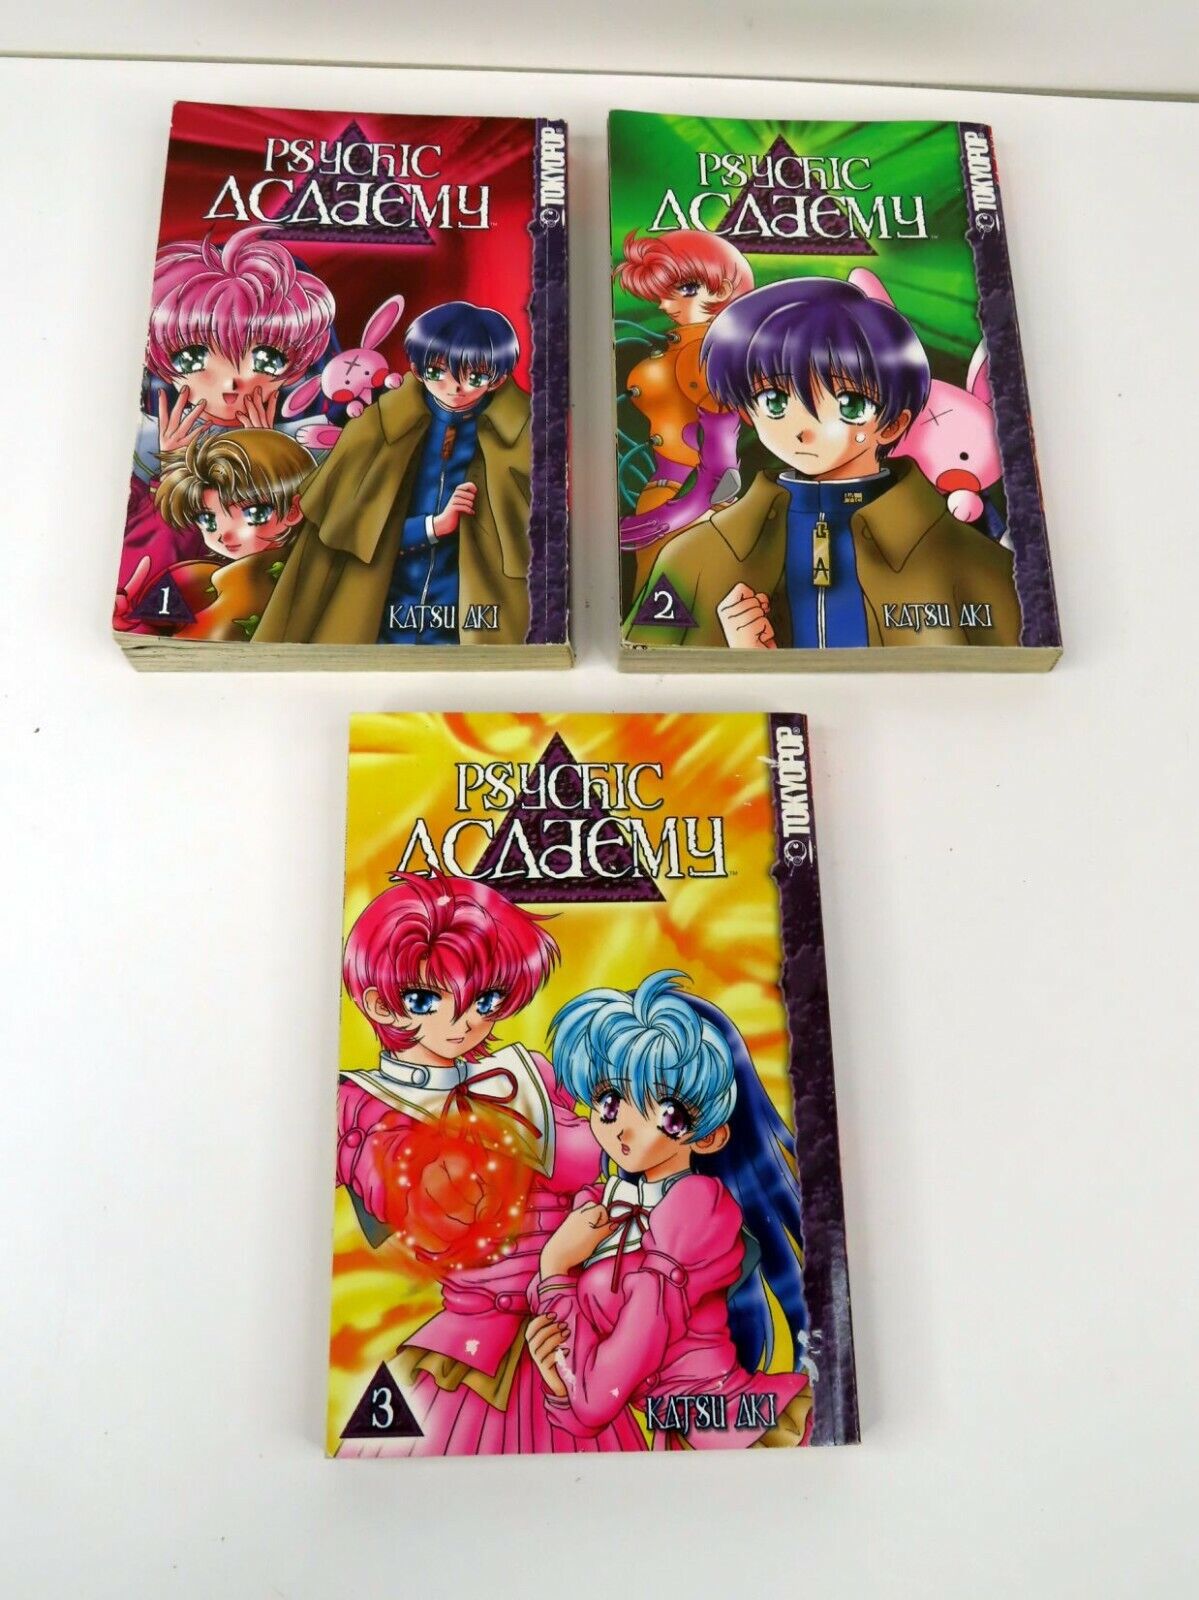 Psychic Academy Manga Books Lot Volumes 1-3 by Katsu Aki Tokyopop